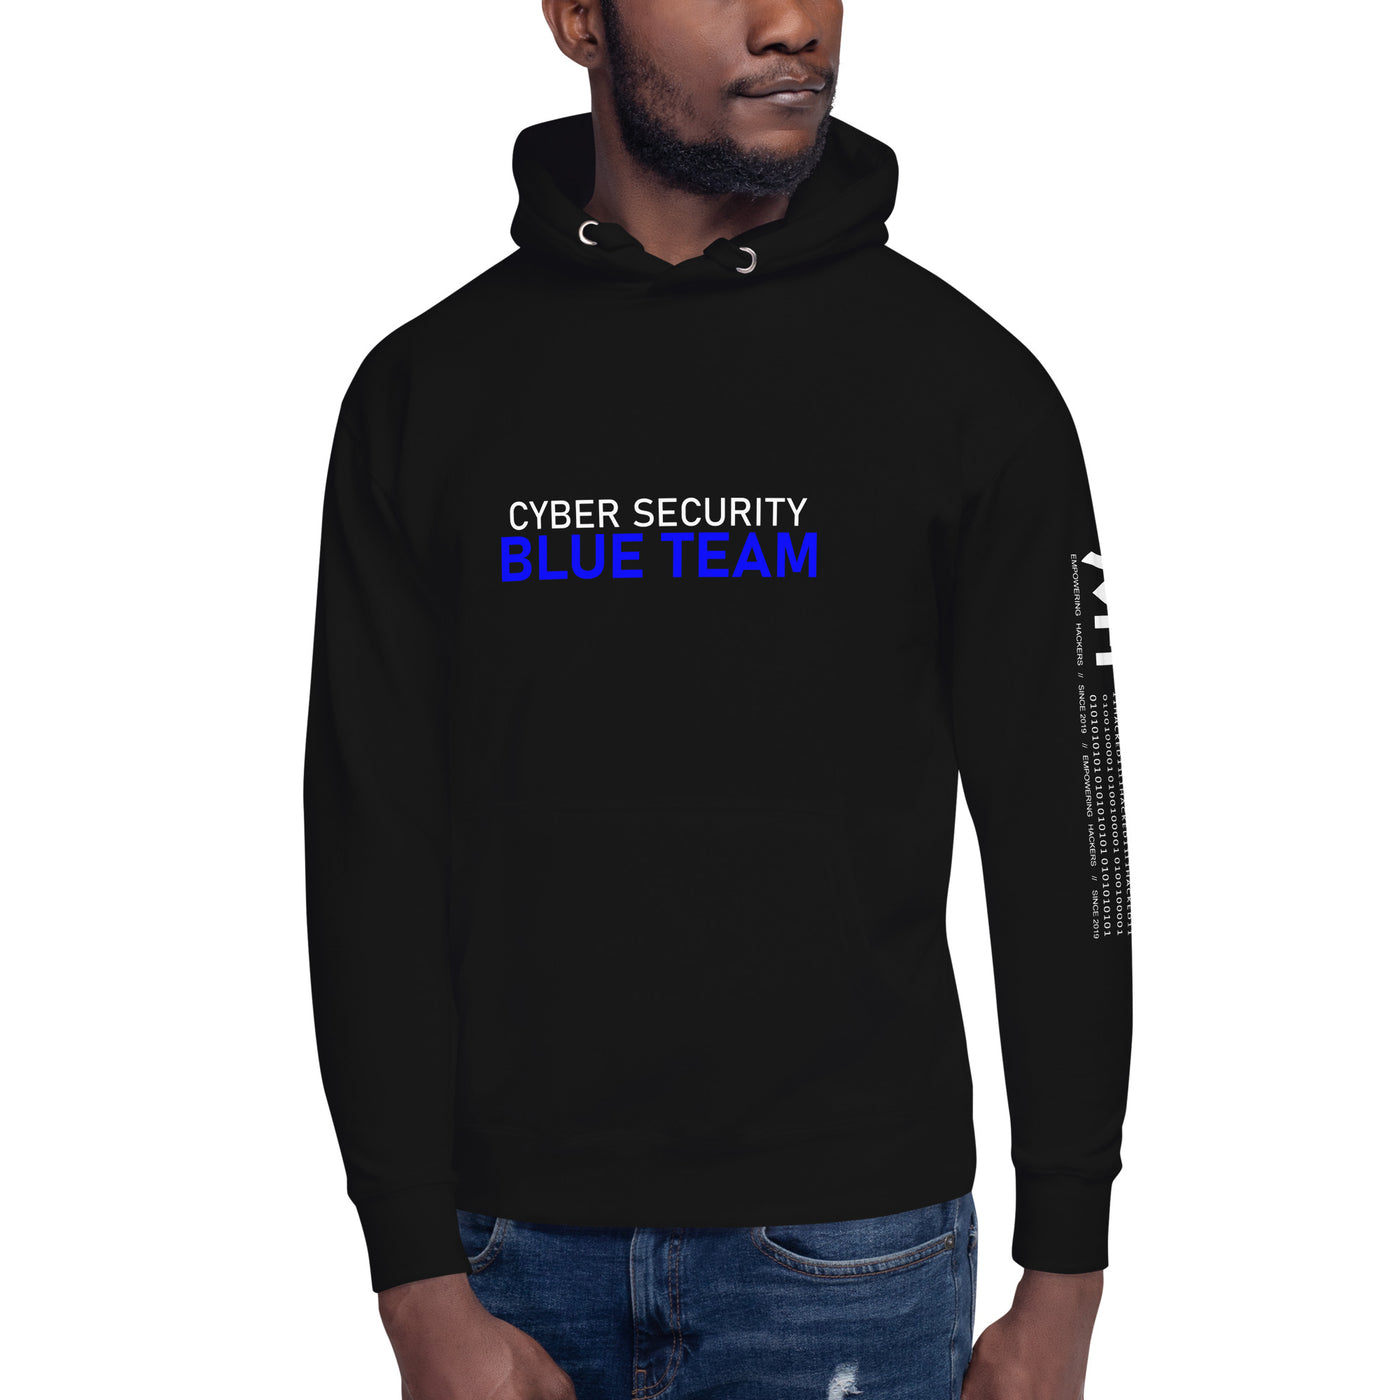 Cyber Security Blue team V4 - Unisex Hoodie